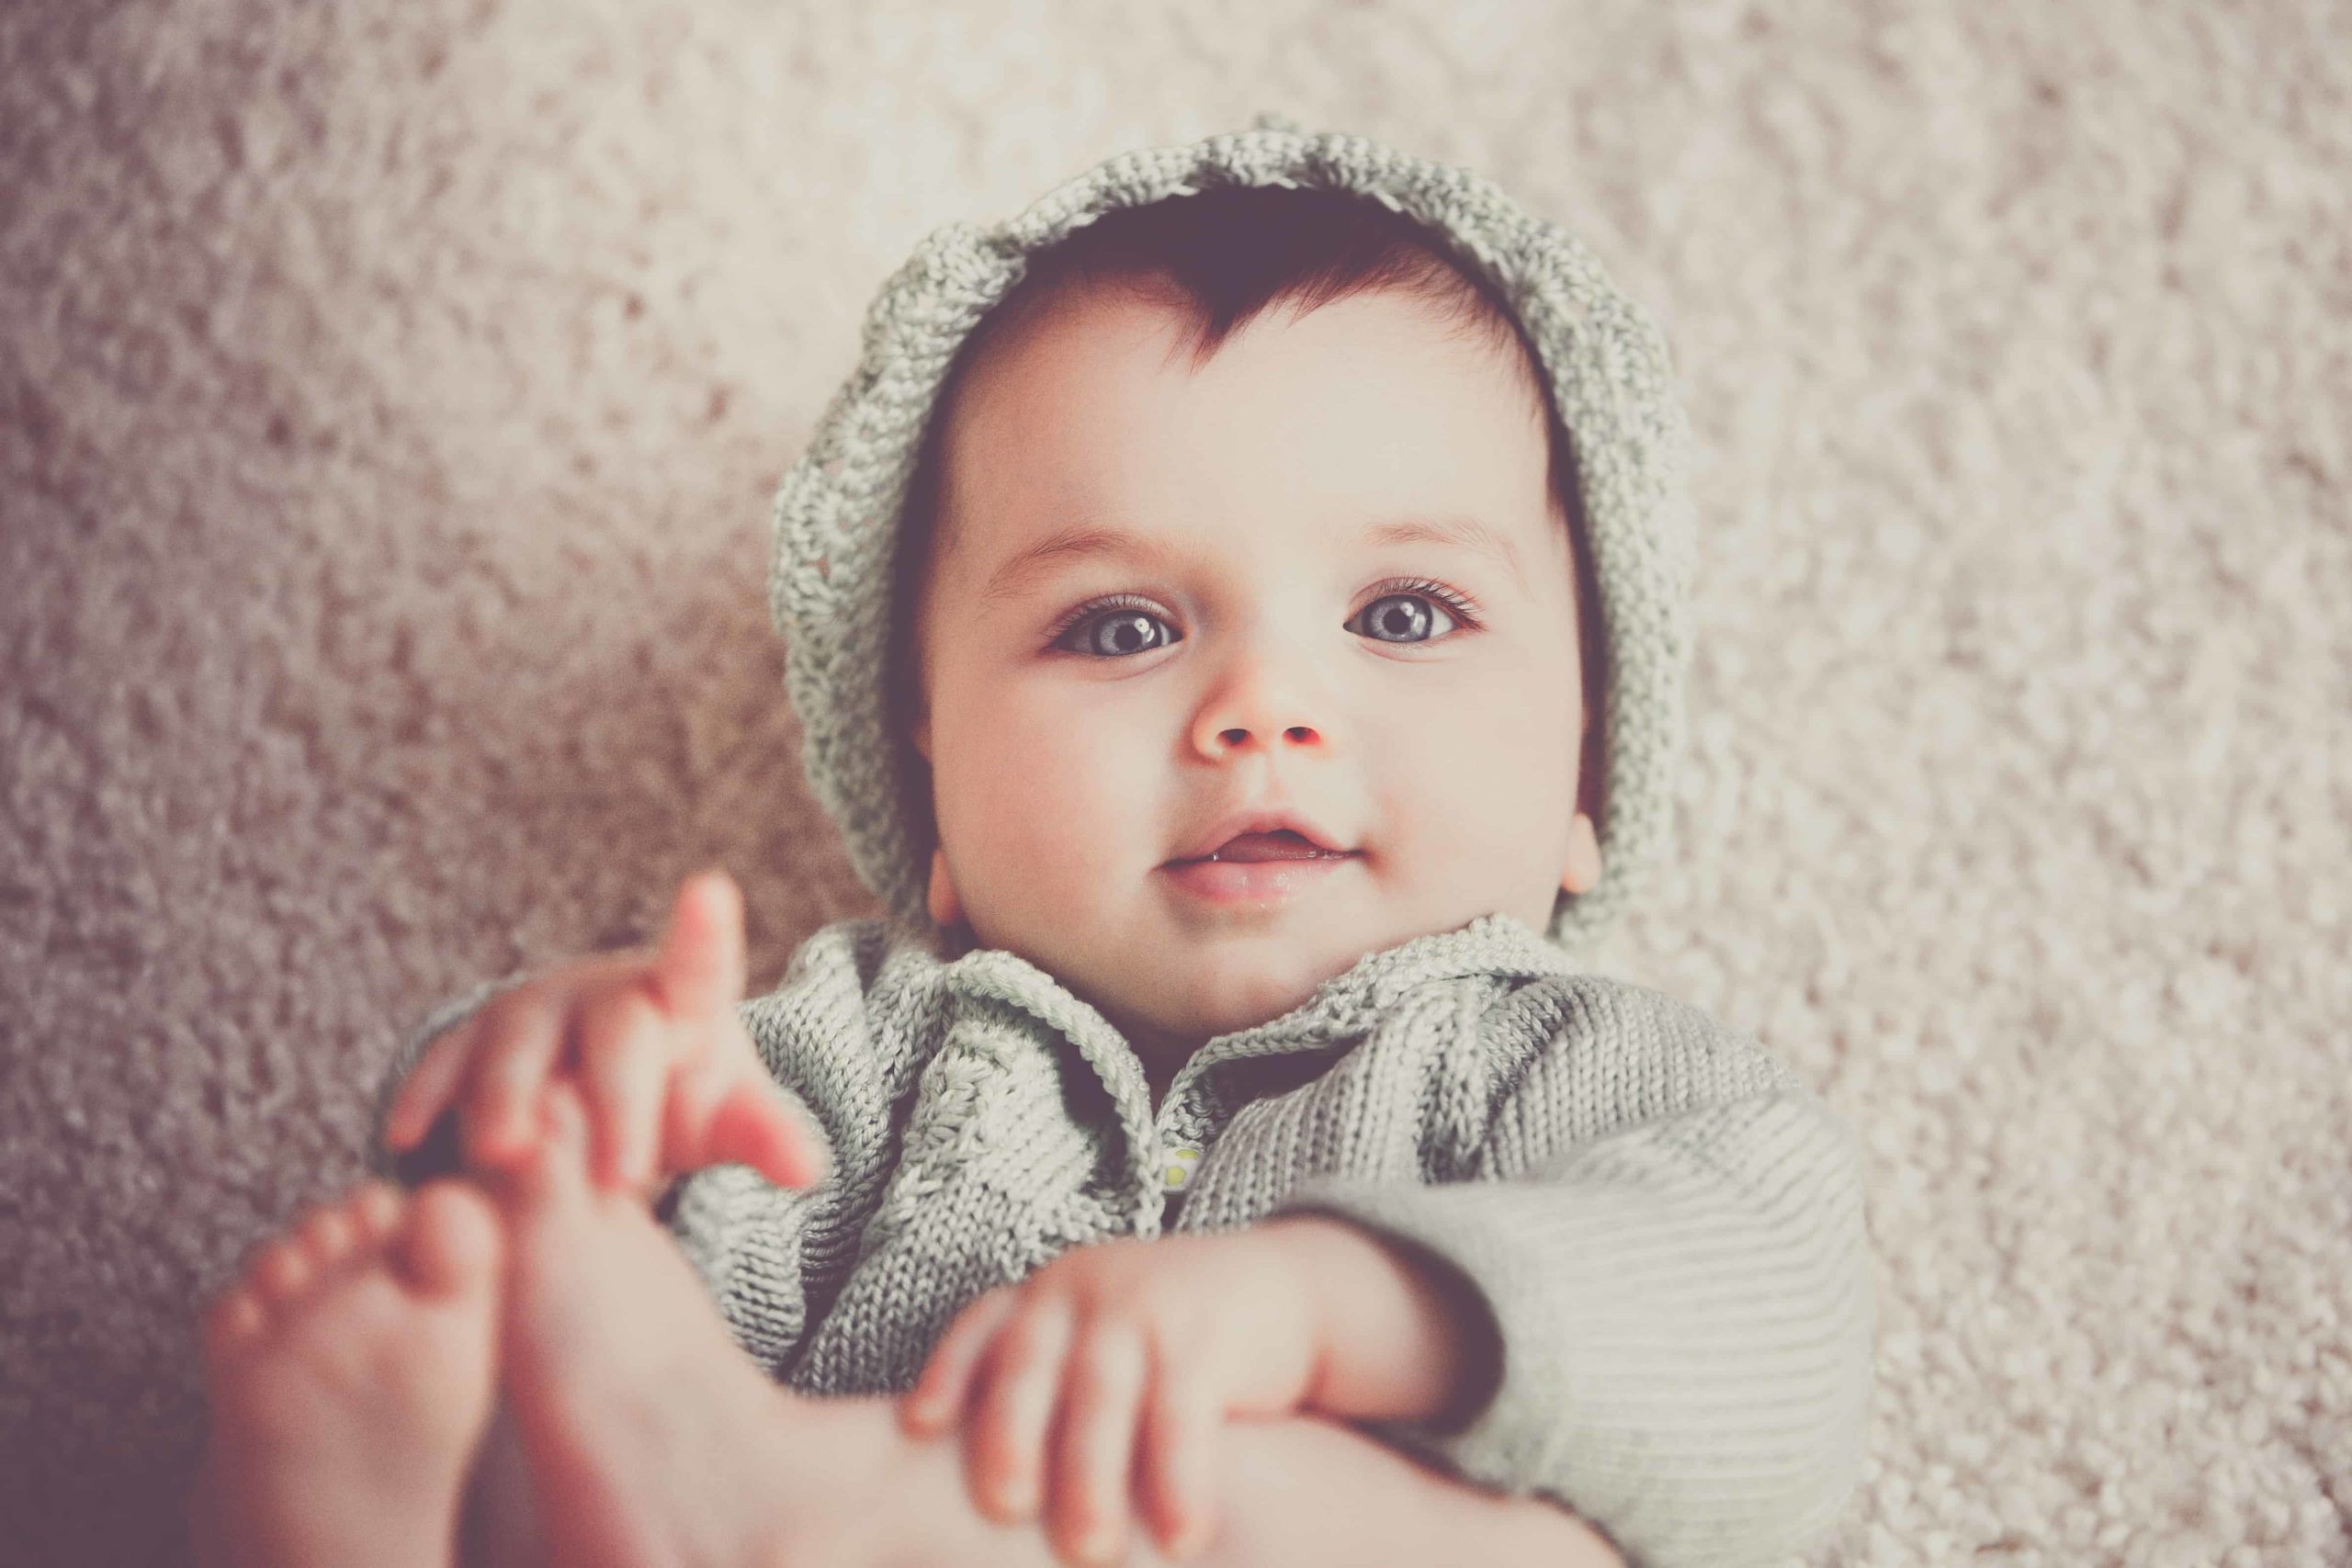 Cute Baby DP for Instagram